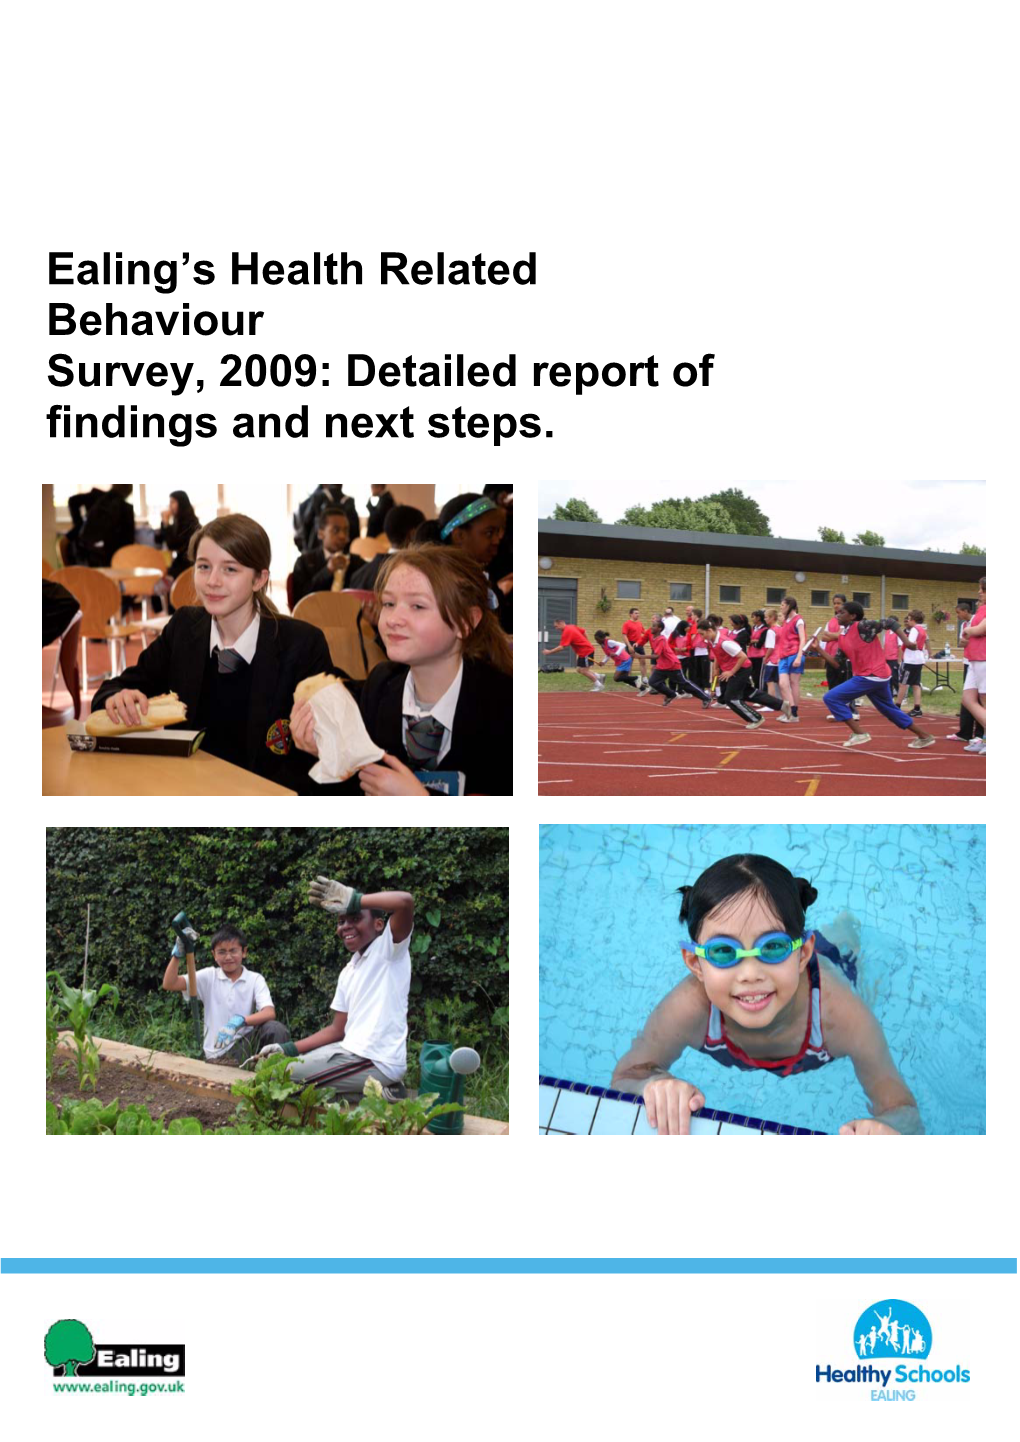 Ealing Health Related Behaviour Survey 2009